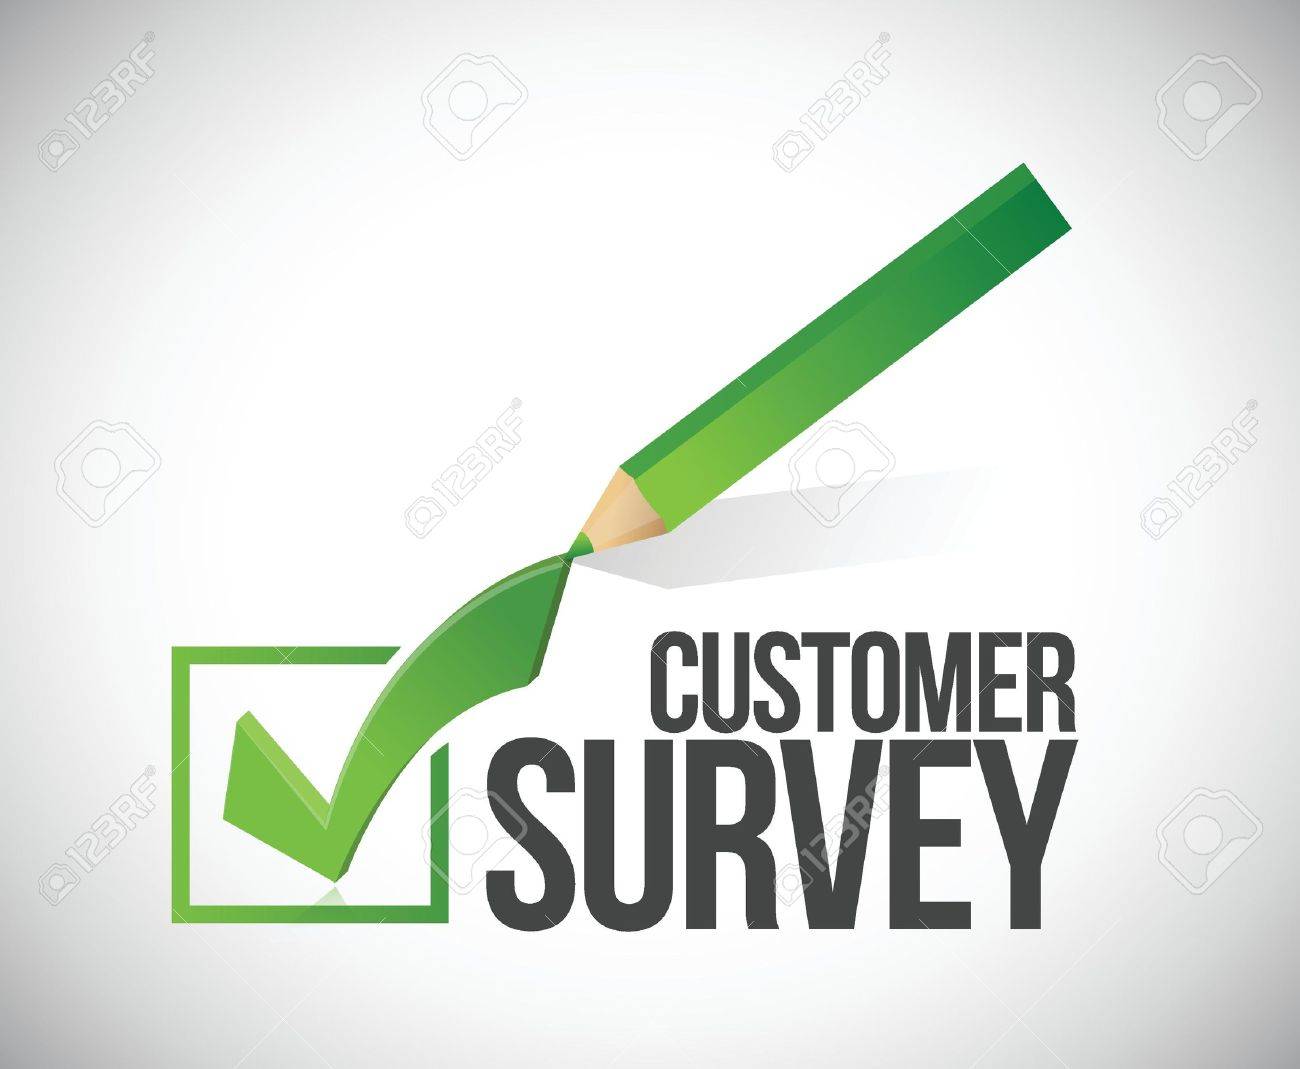 Customer Survey Check Mark Illustration Design Over A White